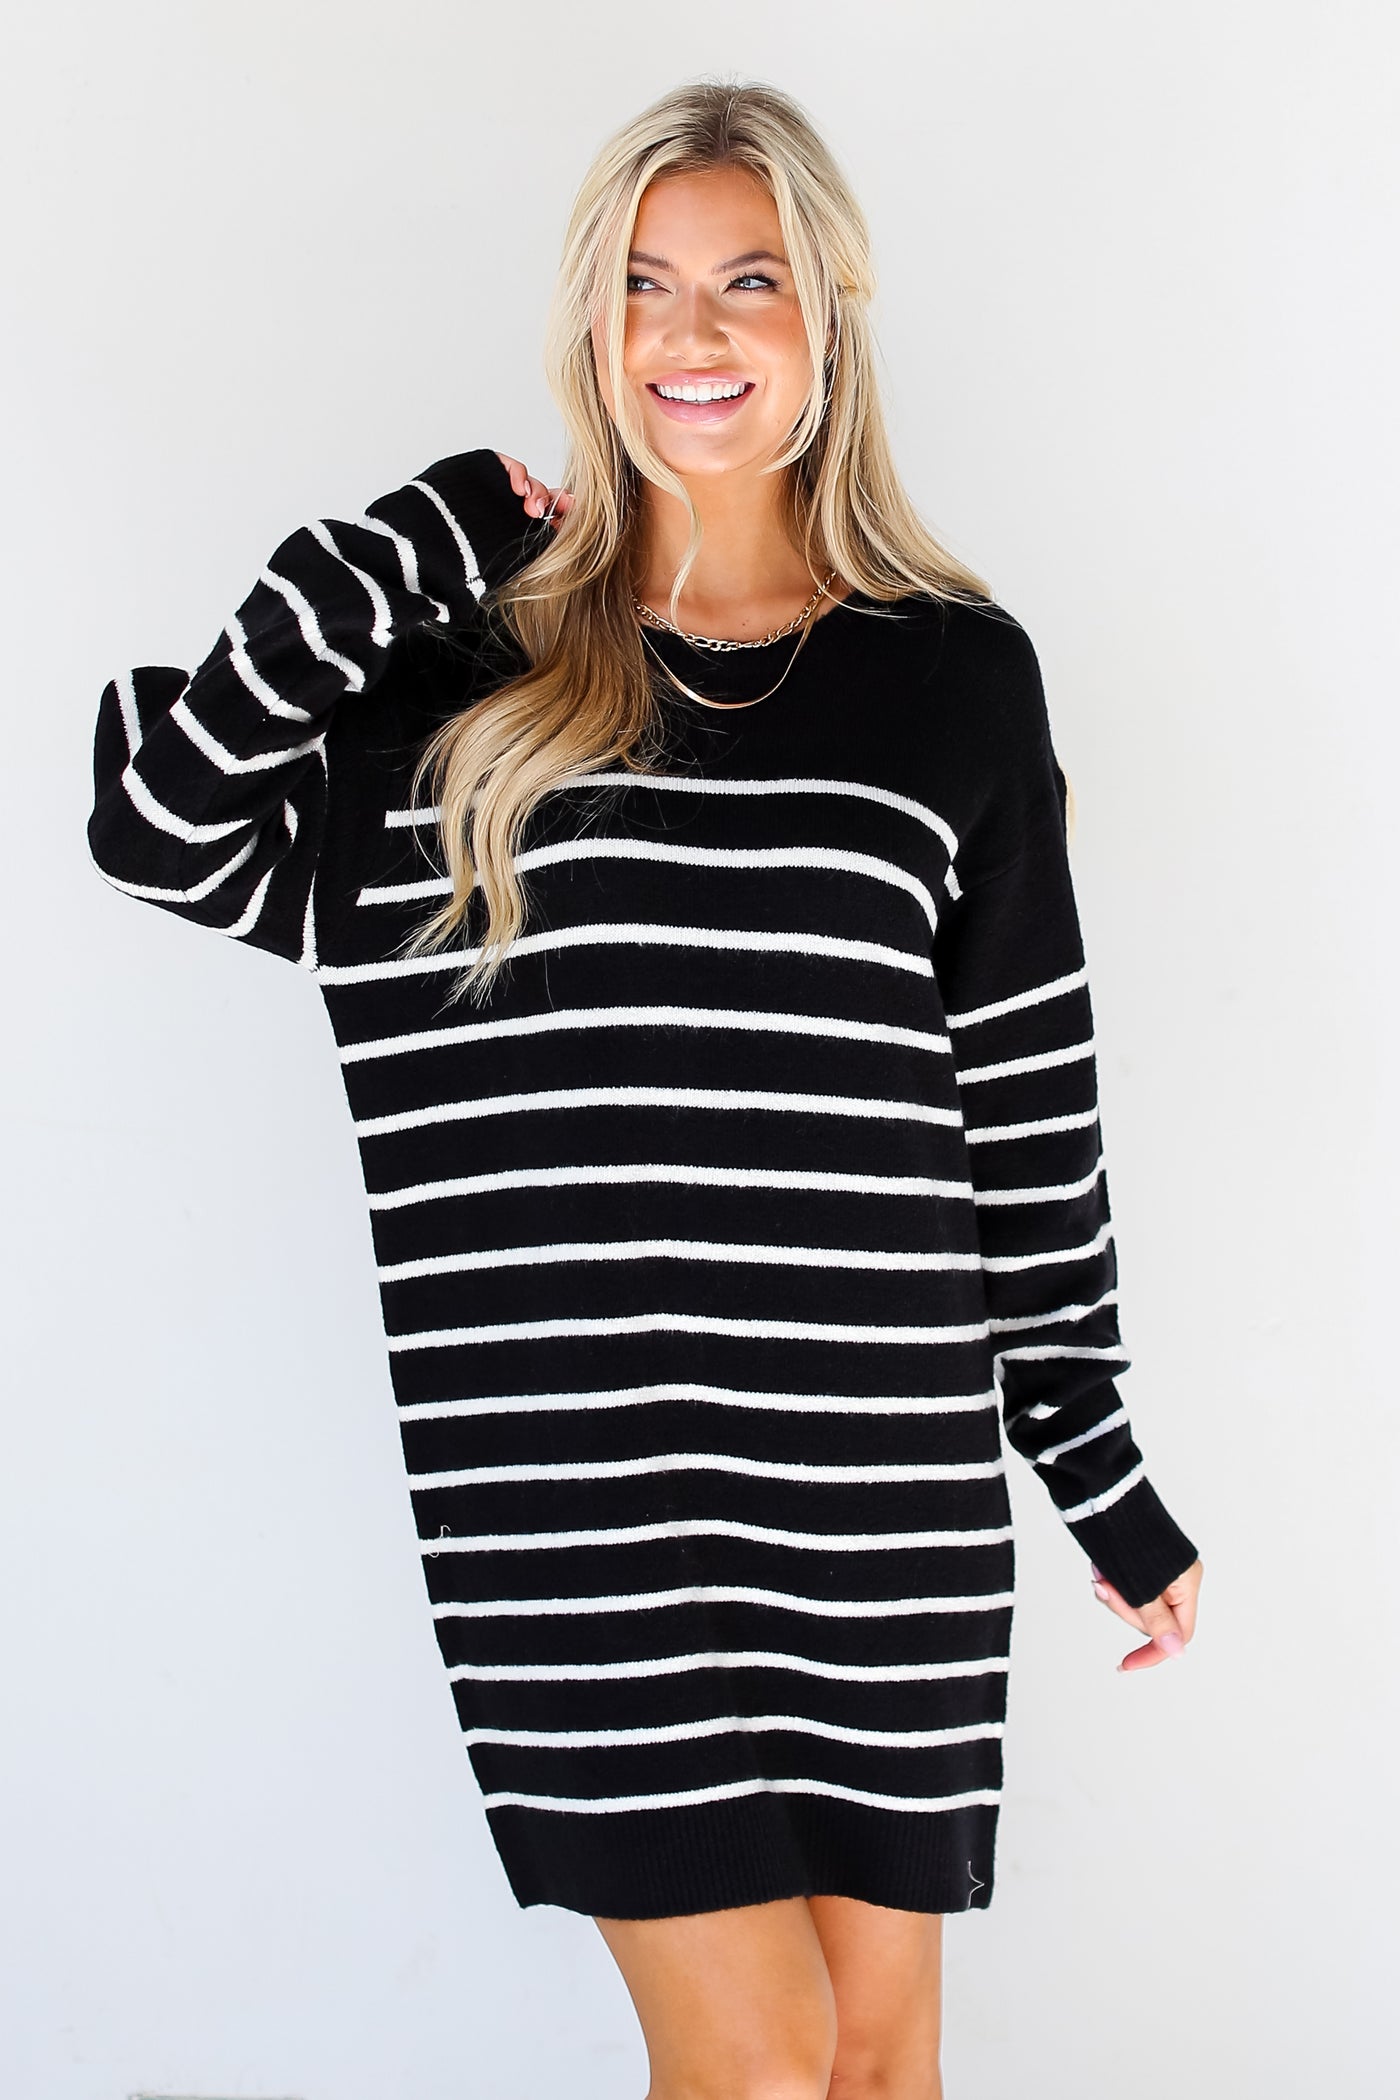 black + white Striped Sweater Mini Dress front view on model